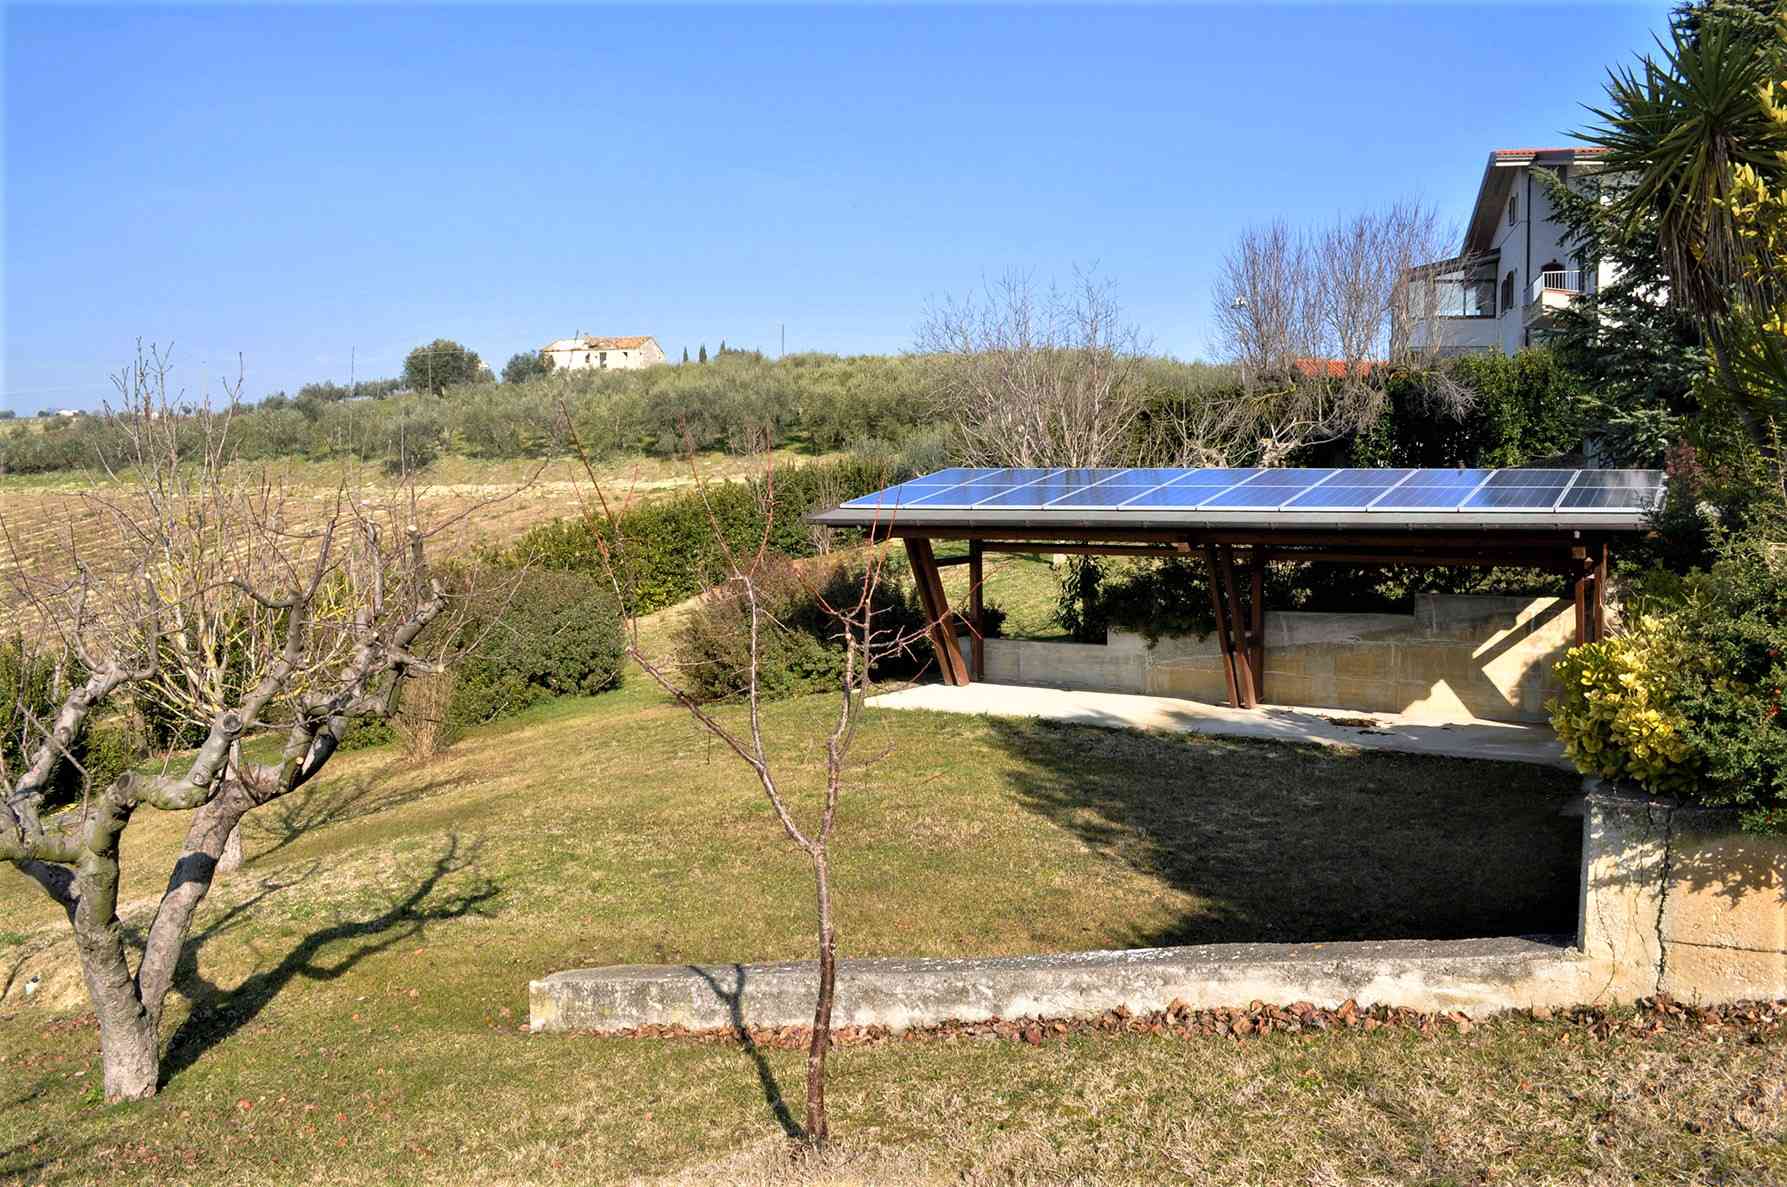 Villa Villa in vendita Tortoreto (TE), Villa Bianca - Tortoreto - EUR 567.877 480